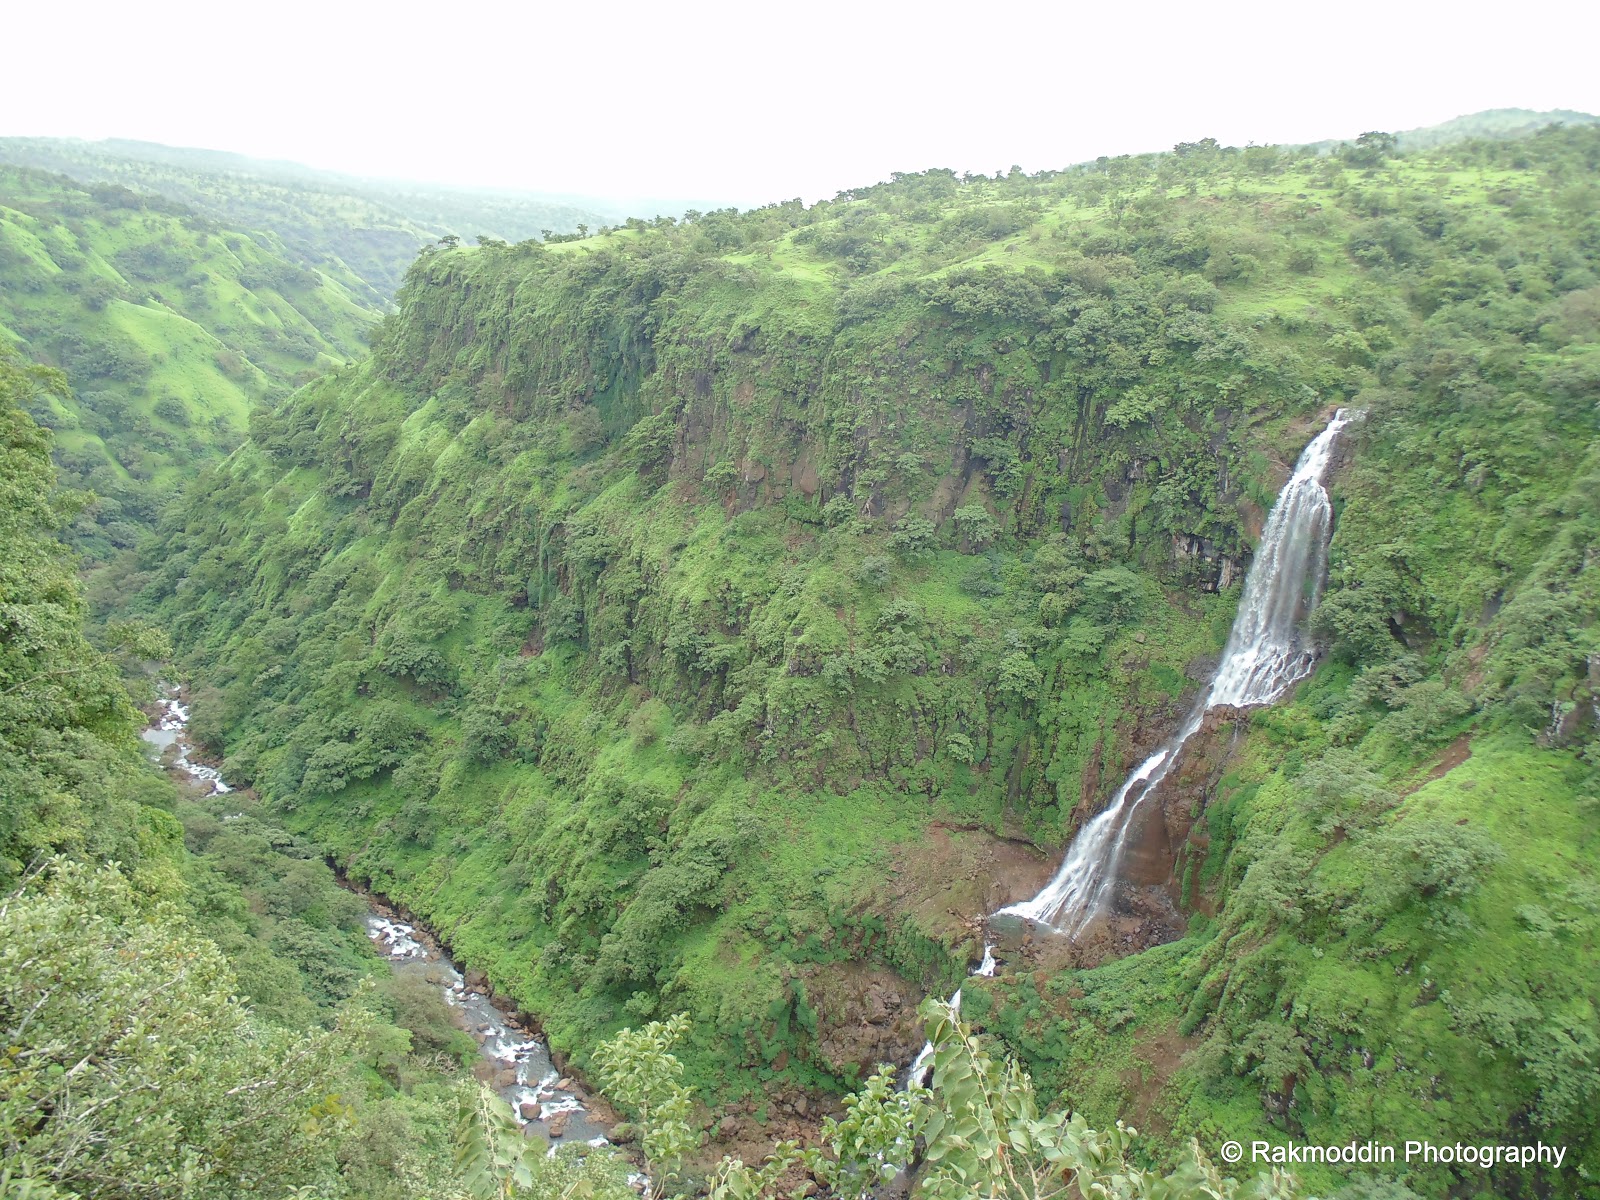 Thoseghar waterfalls in Satara during the monsoon